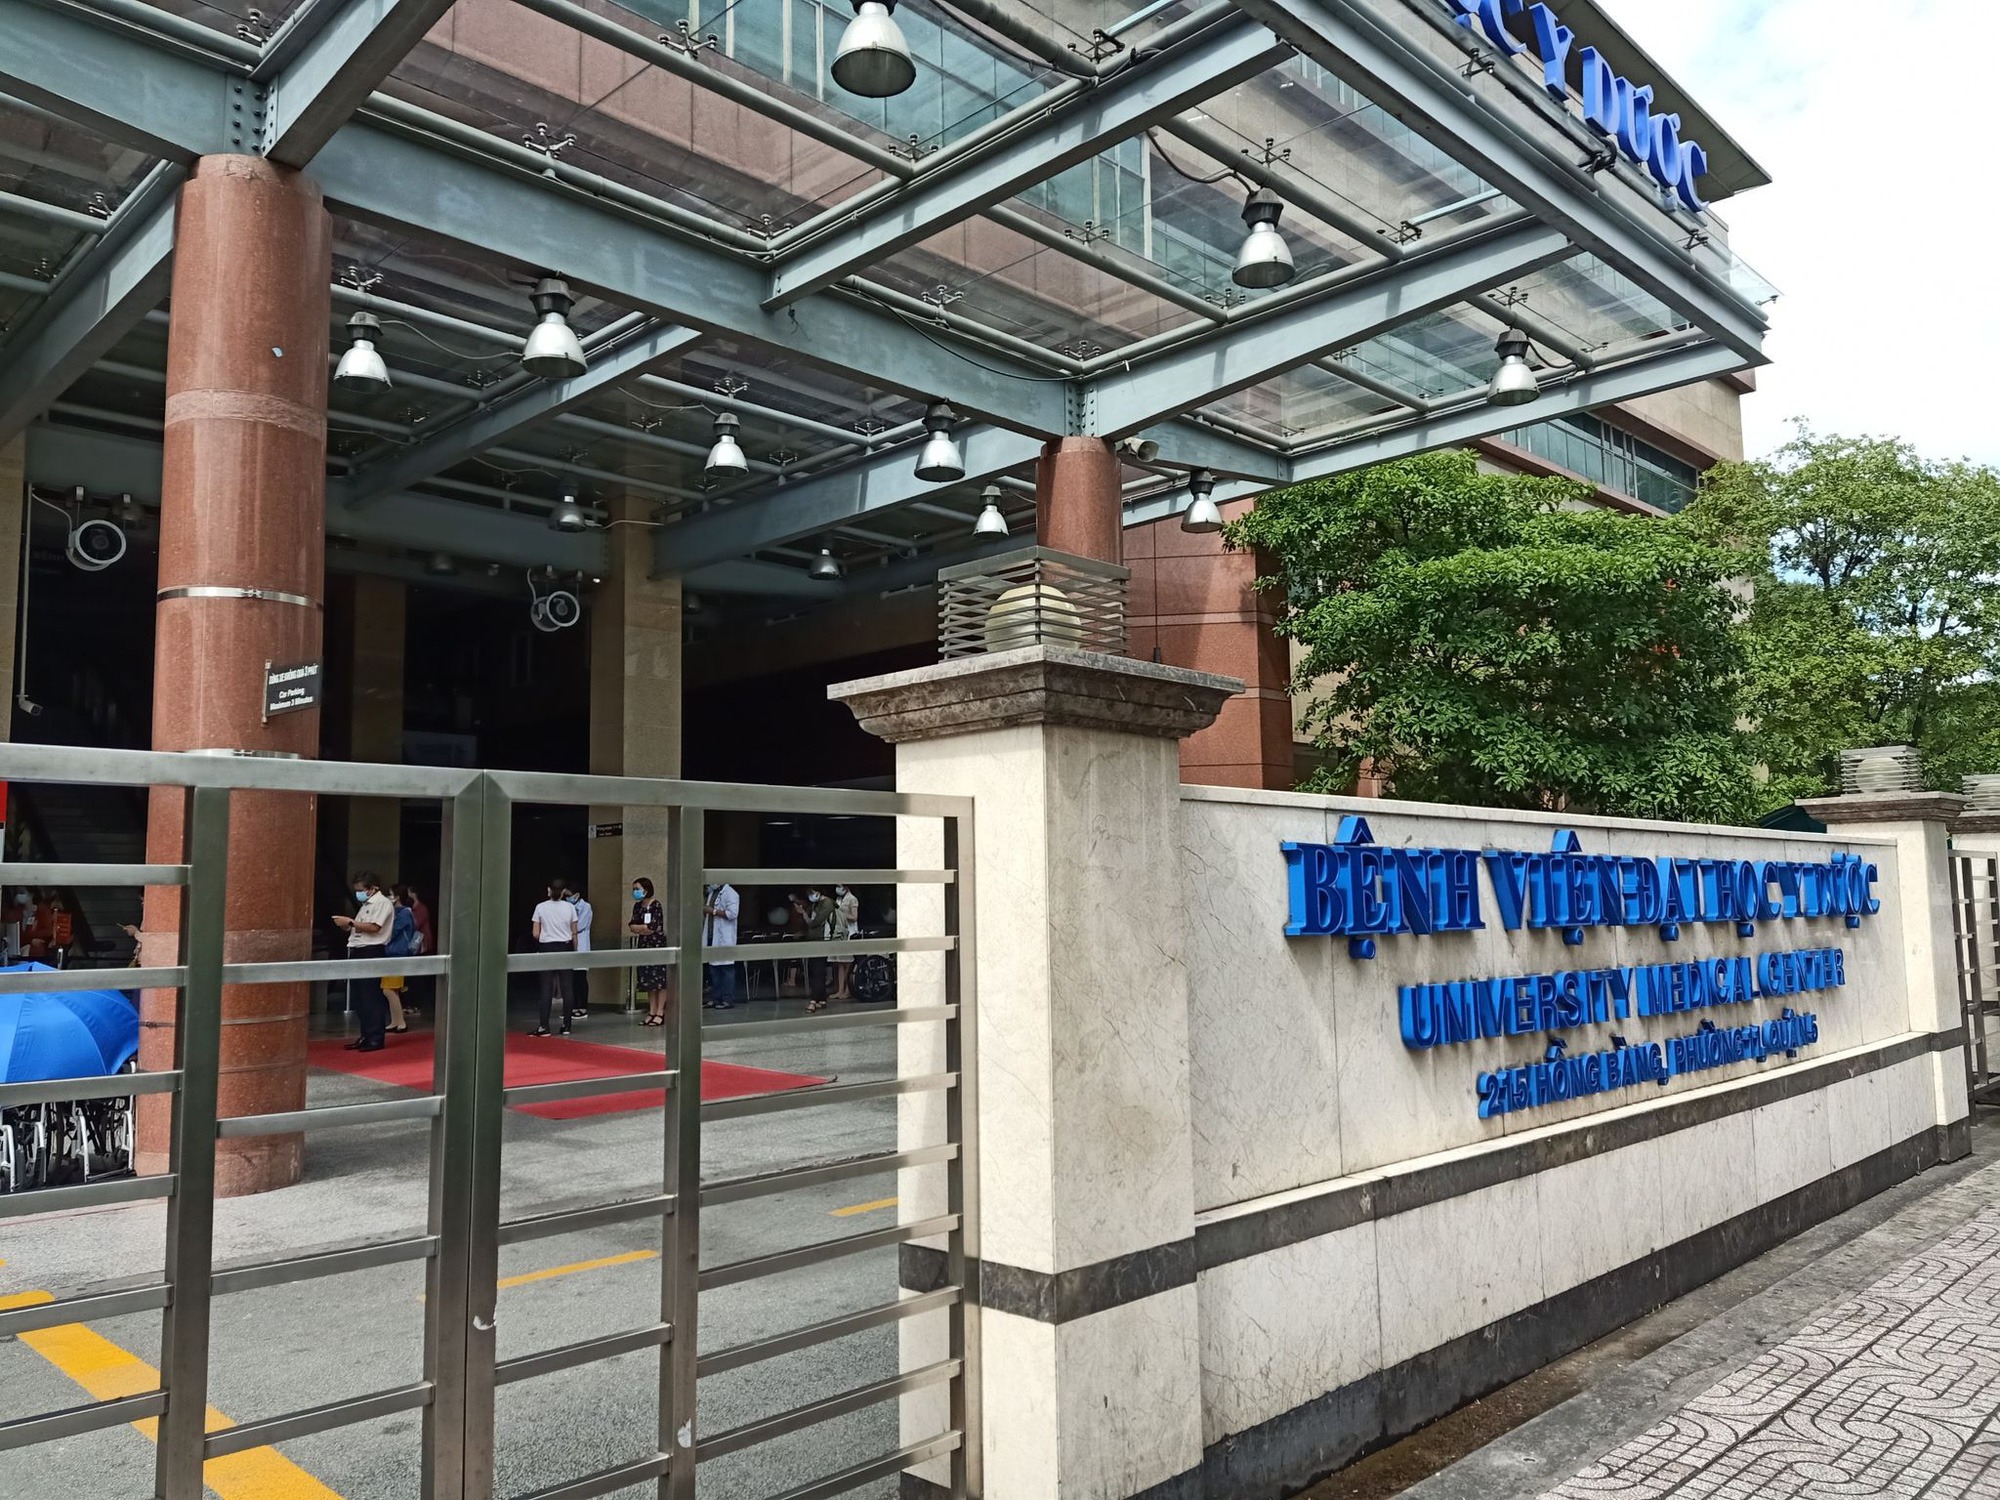 General Hospital in Saigon - University of Medicine and Pharmacy